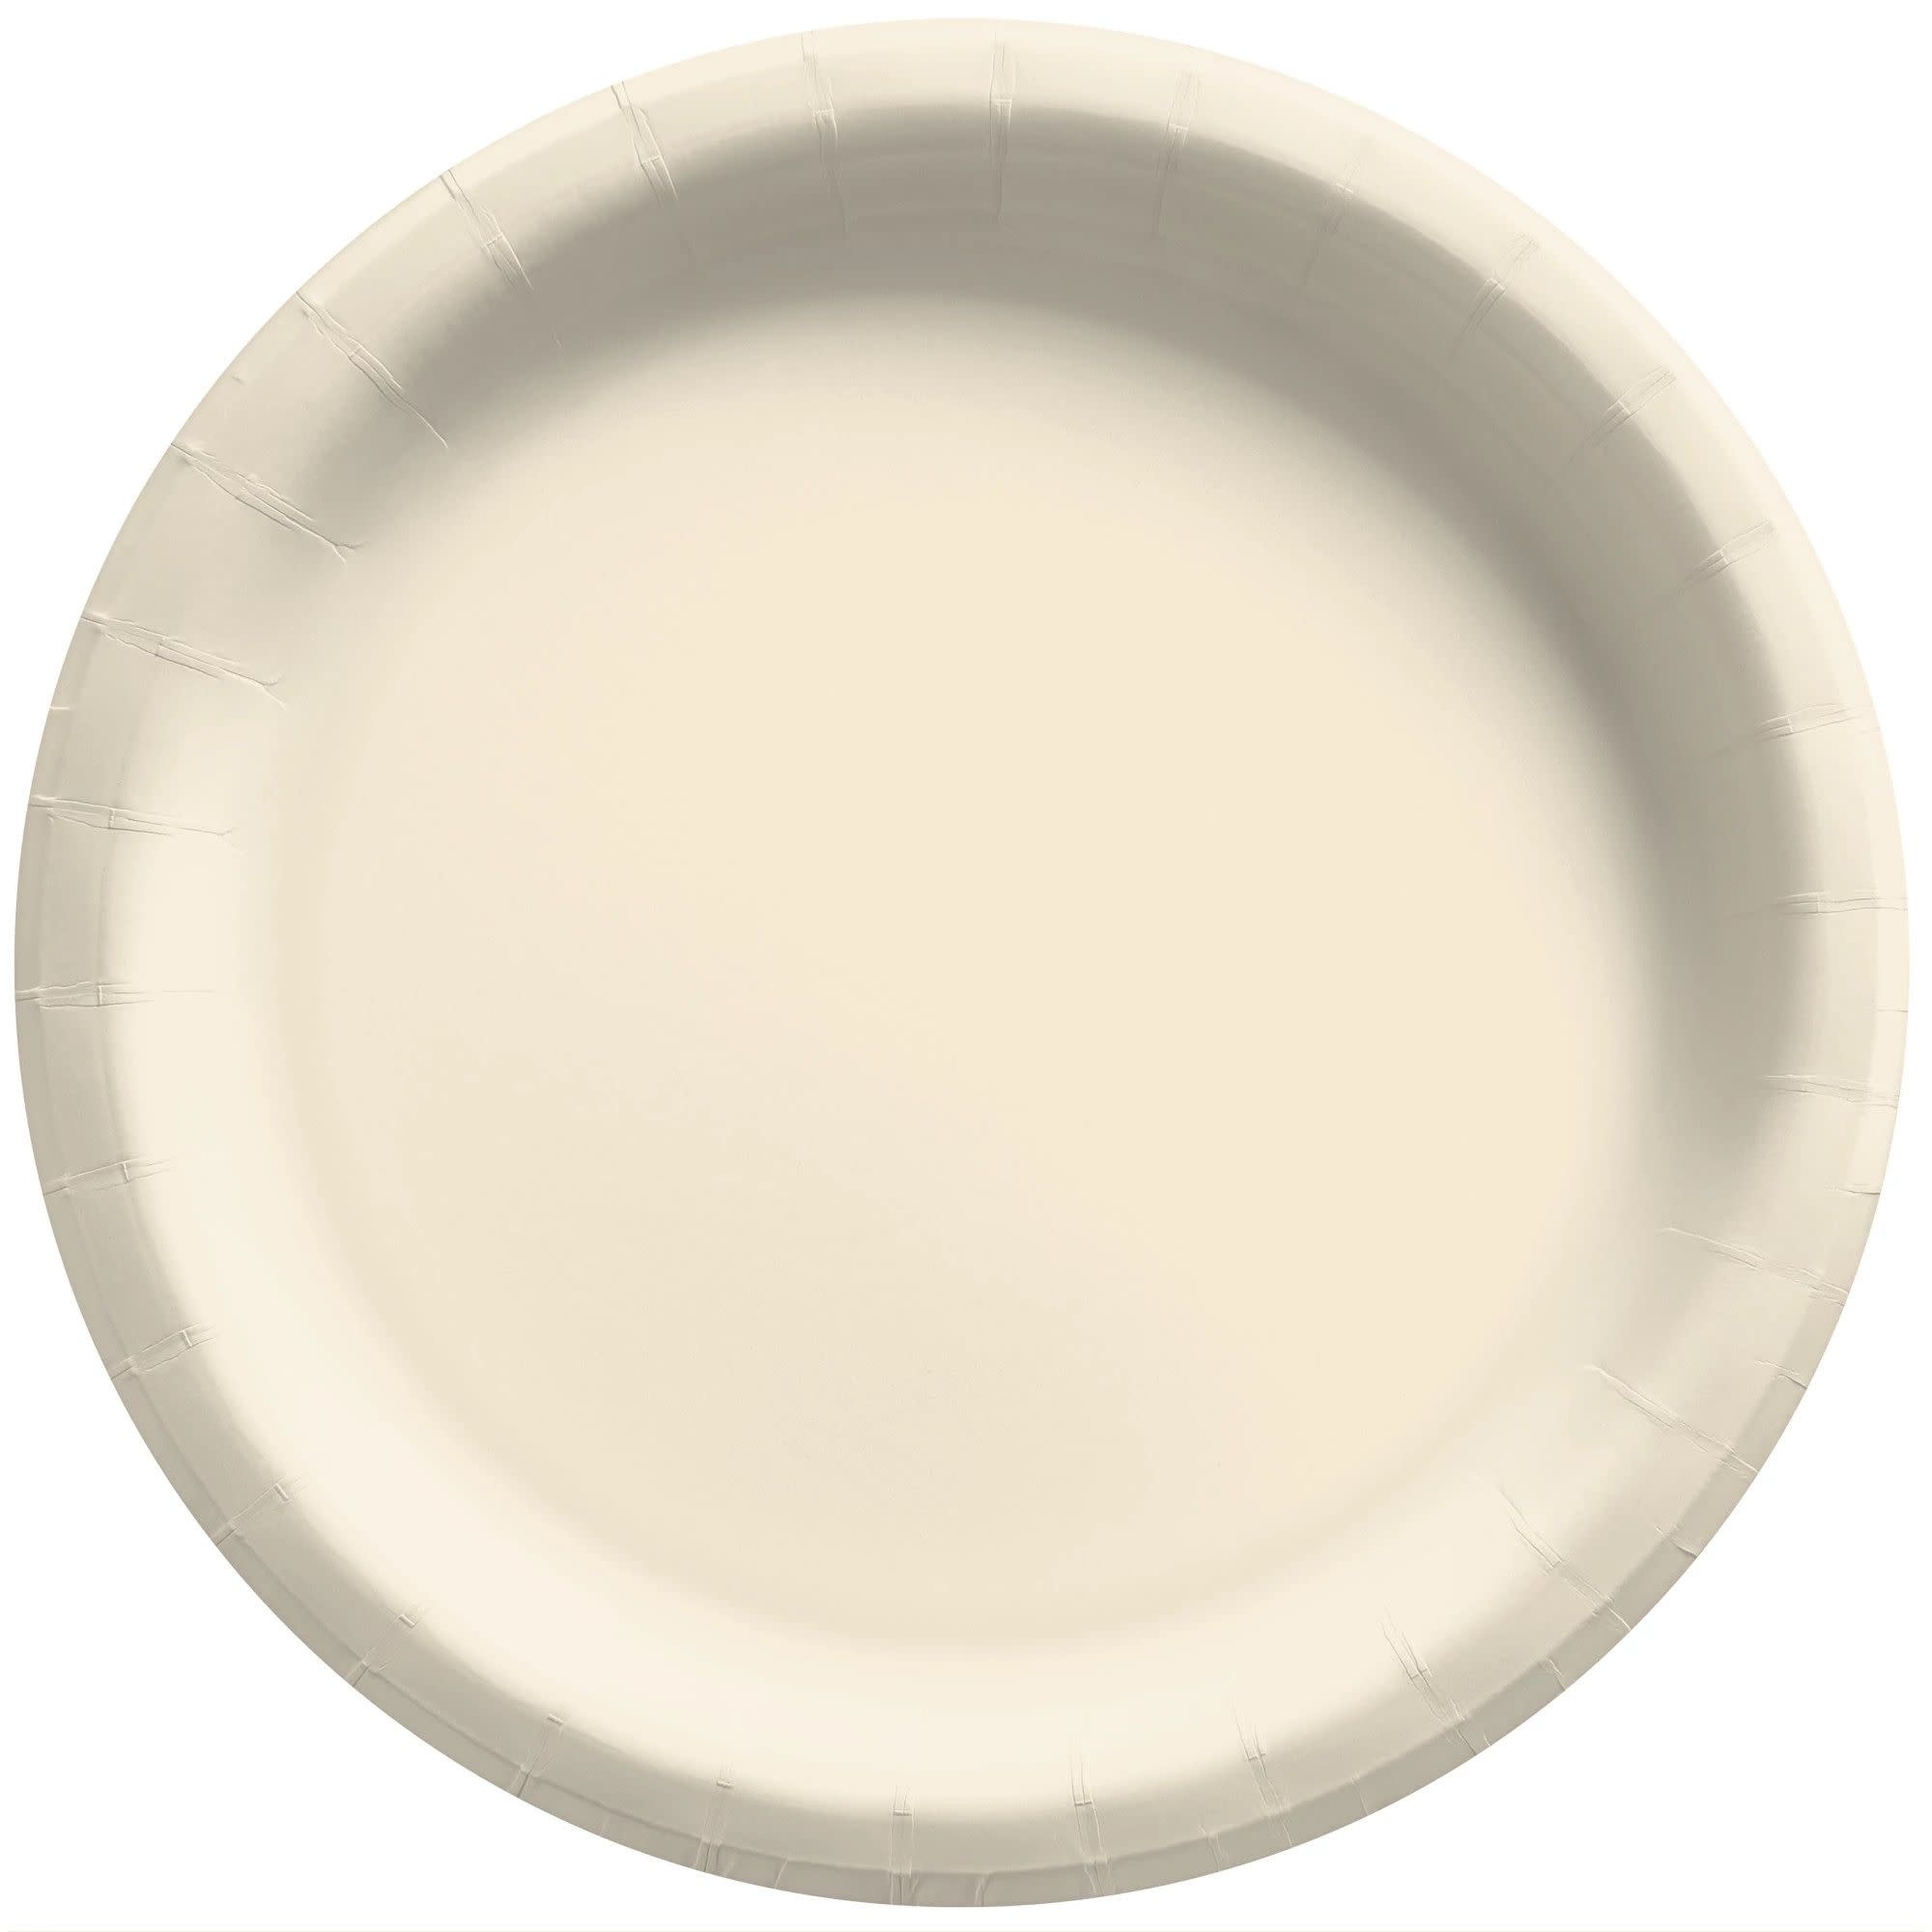 6 3/4" Round Paper Plates, Mid Ct. - Vanilla Creme